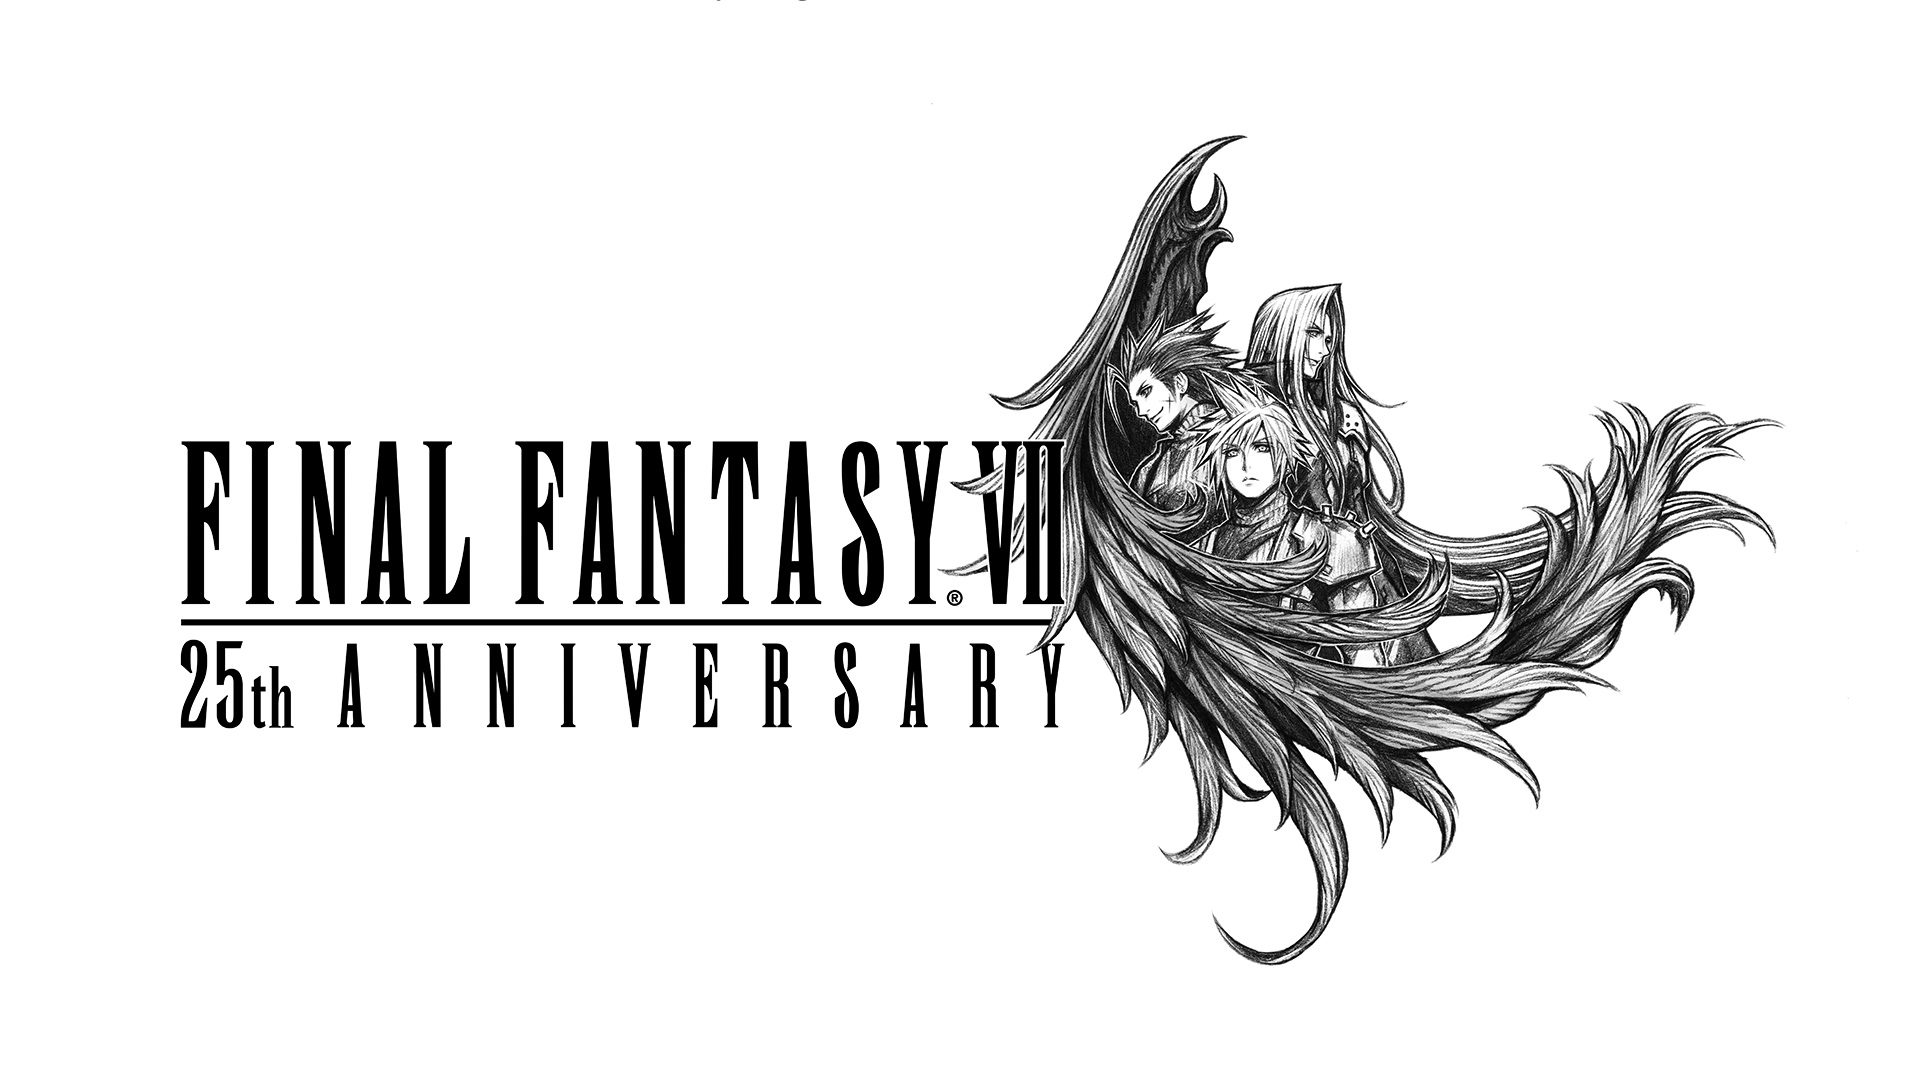 Final Fantasy VII 25th anniversary logo